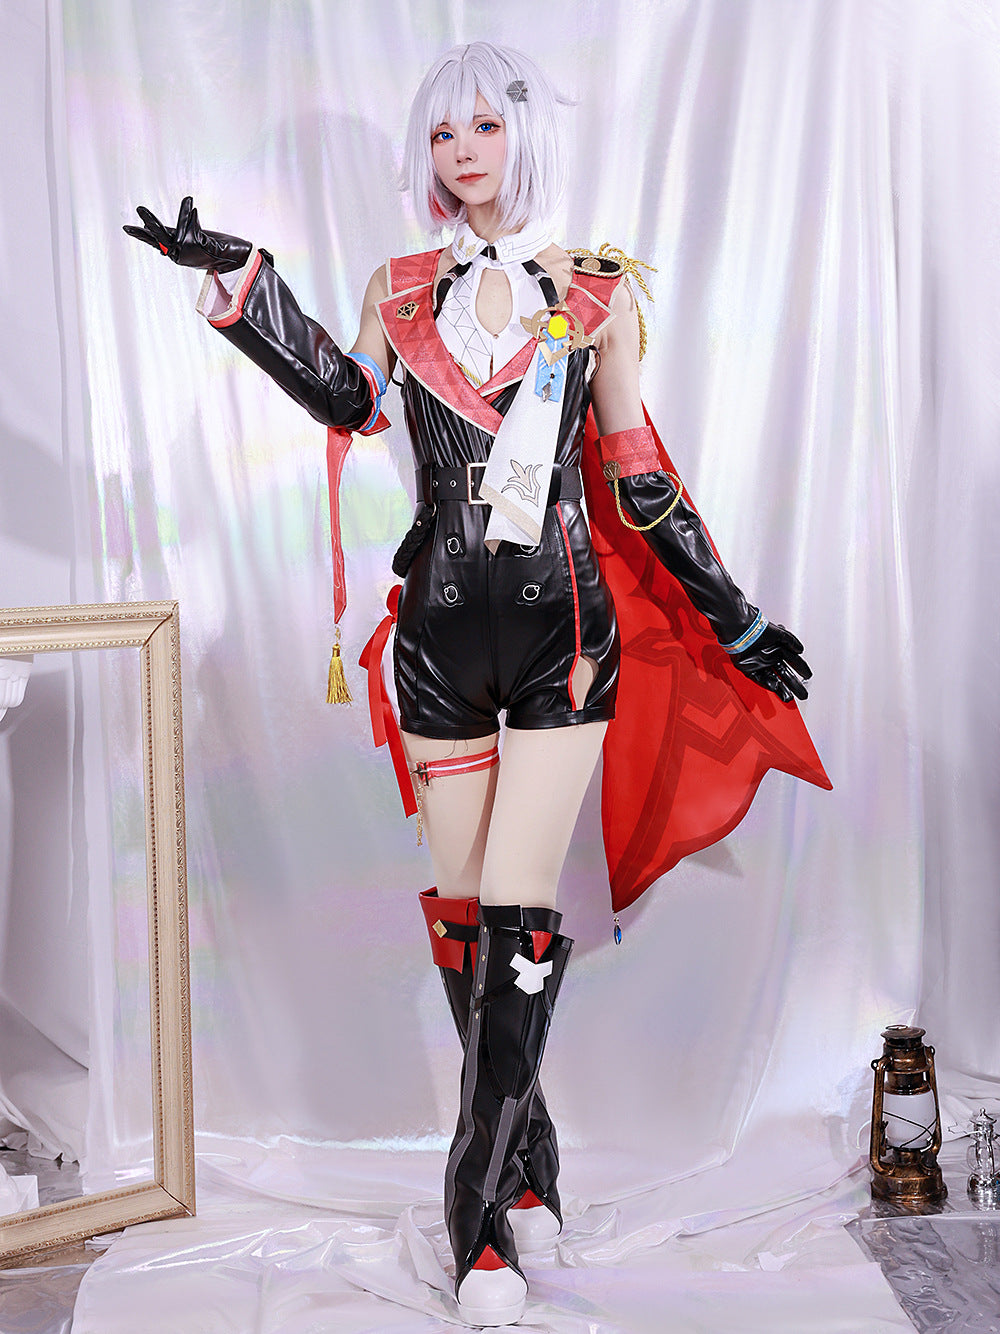 honkai star rail topaz female full set cosplay costume